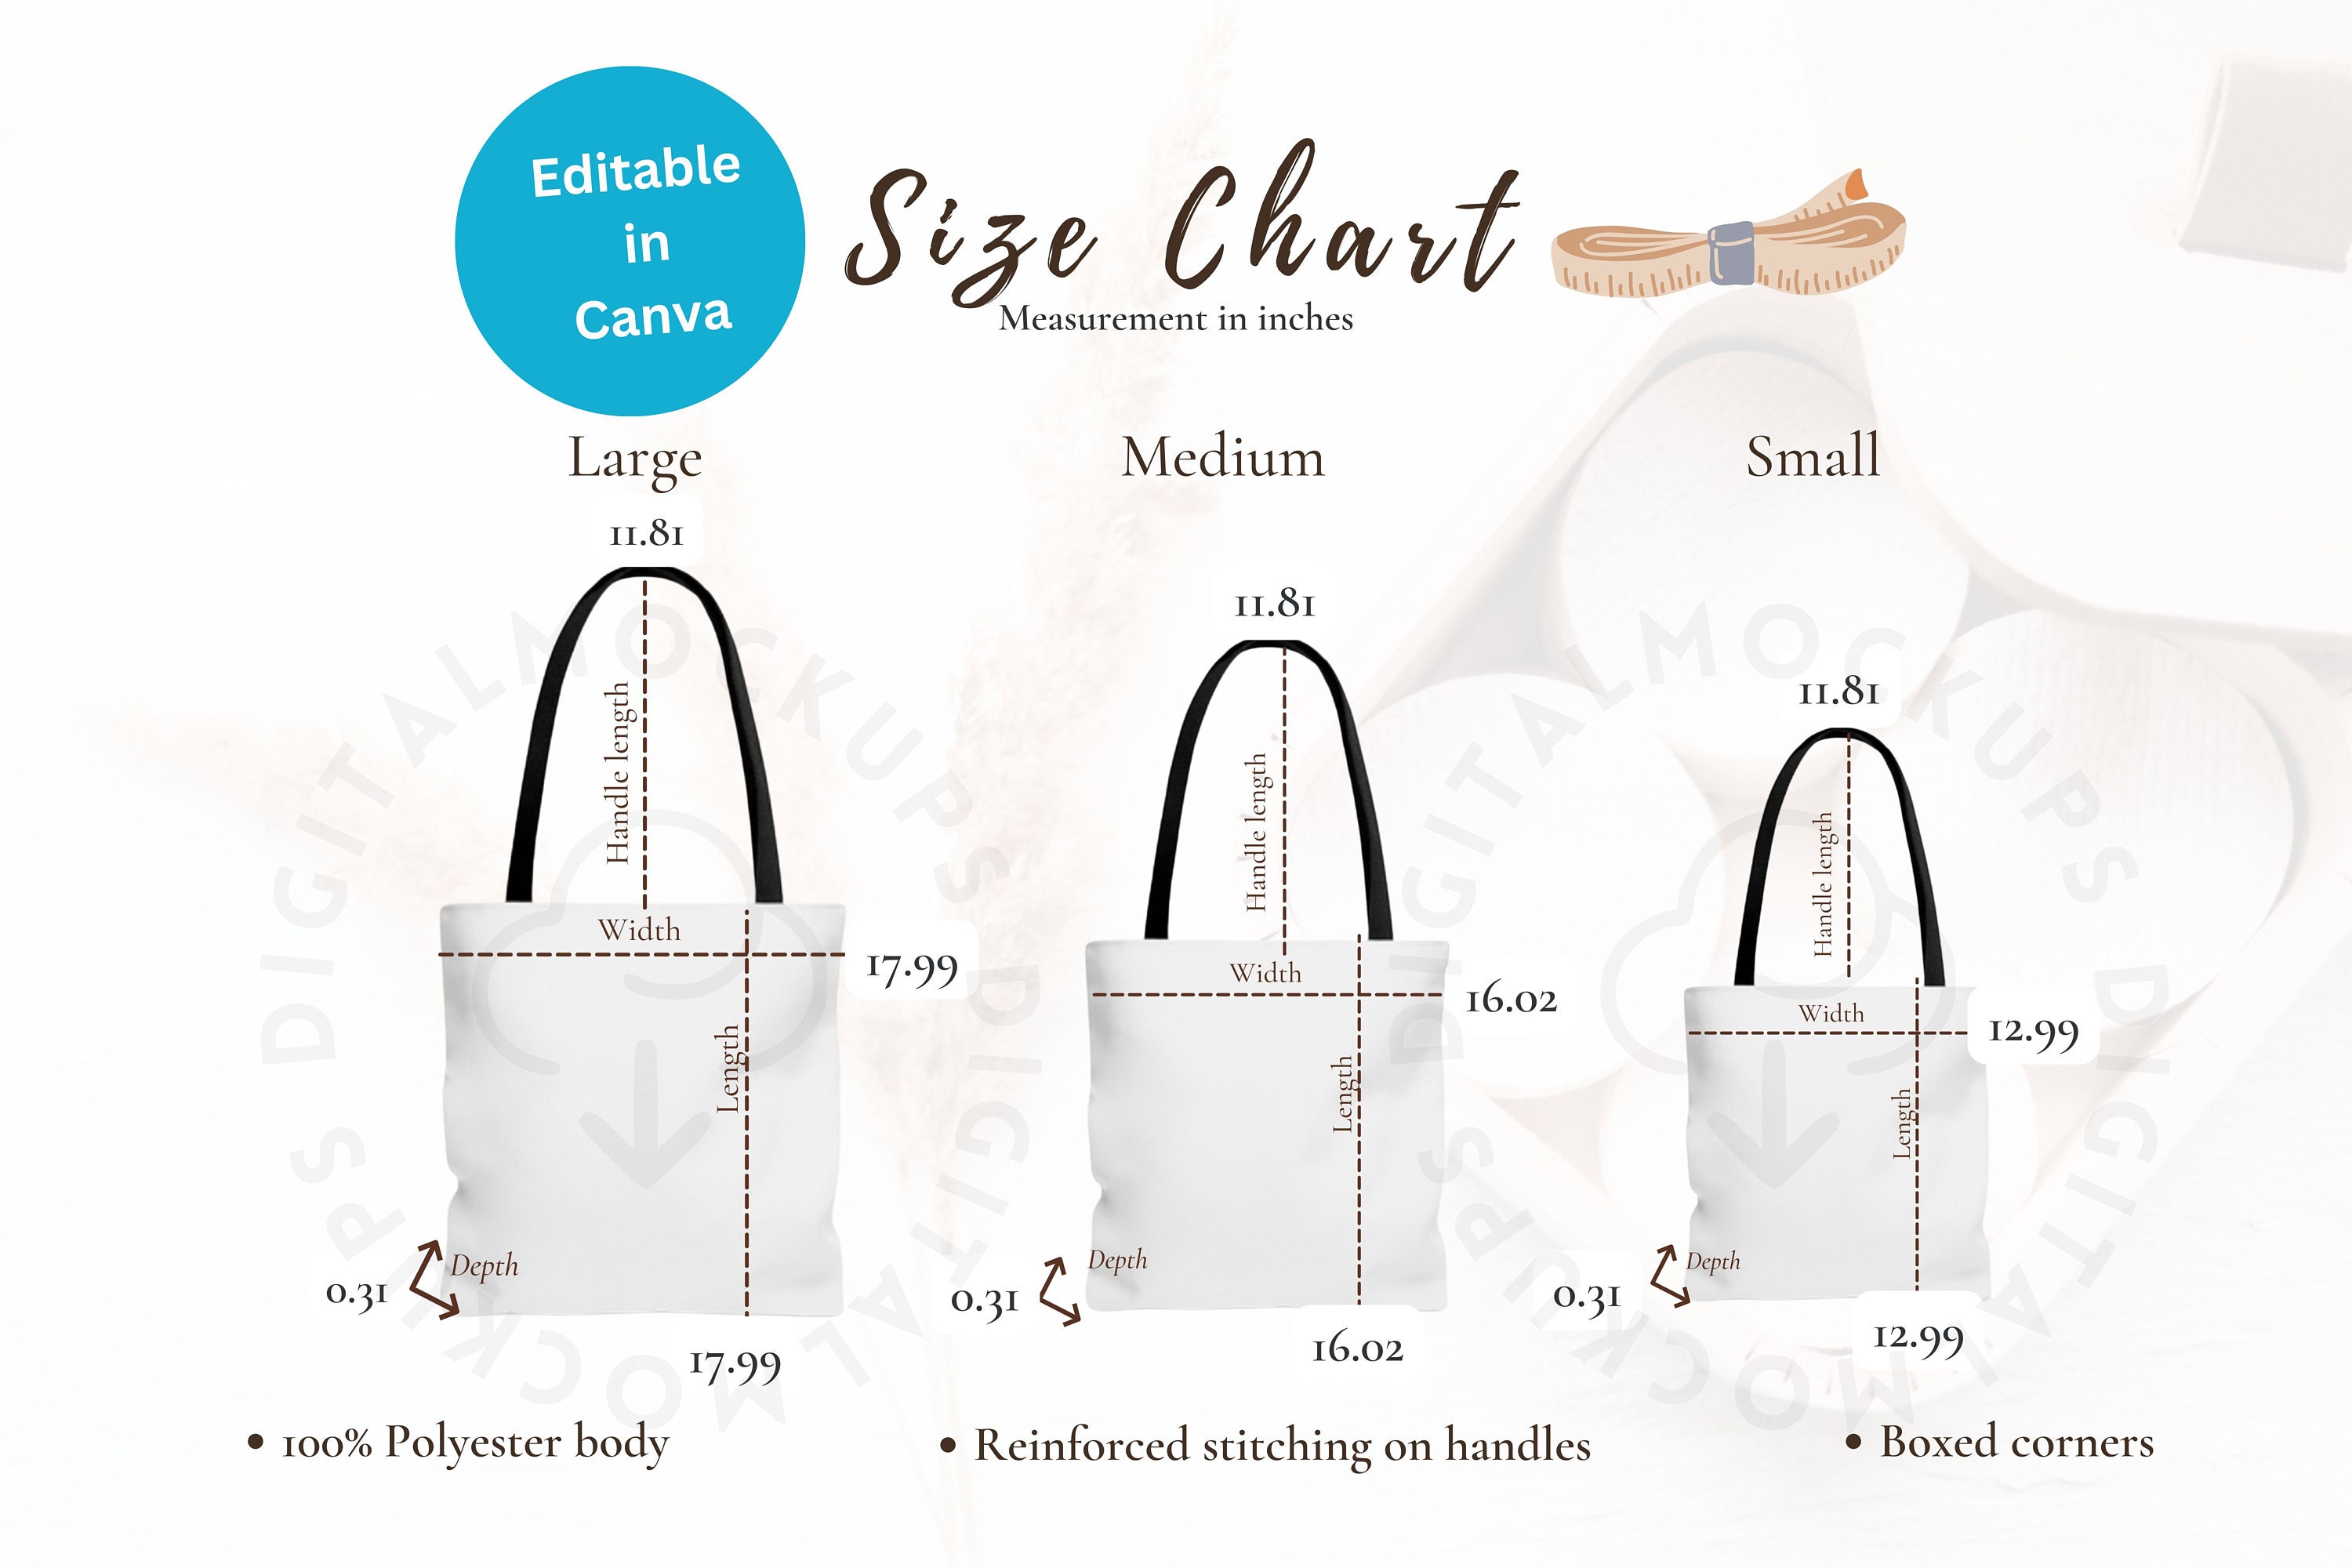 Tote Bag Size Chart -  UK